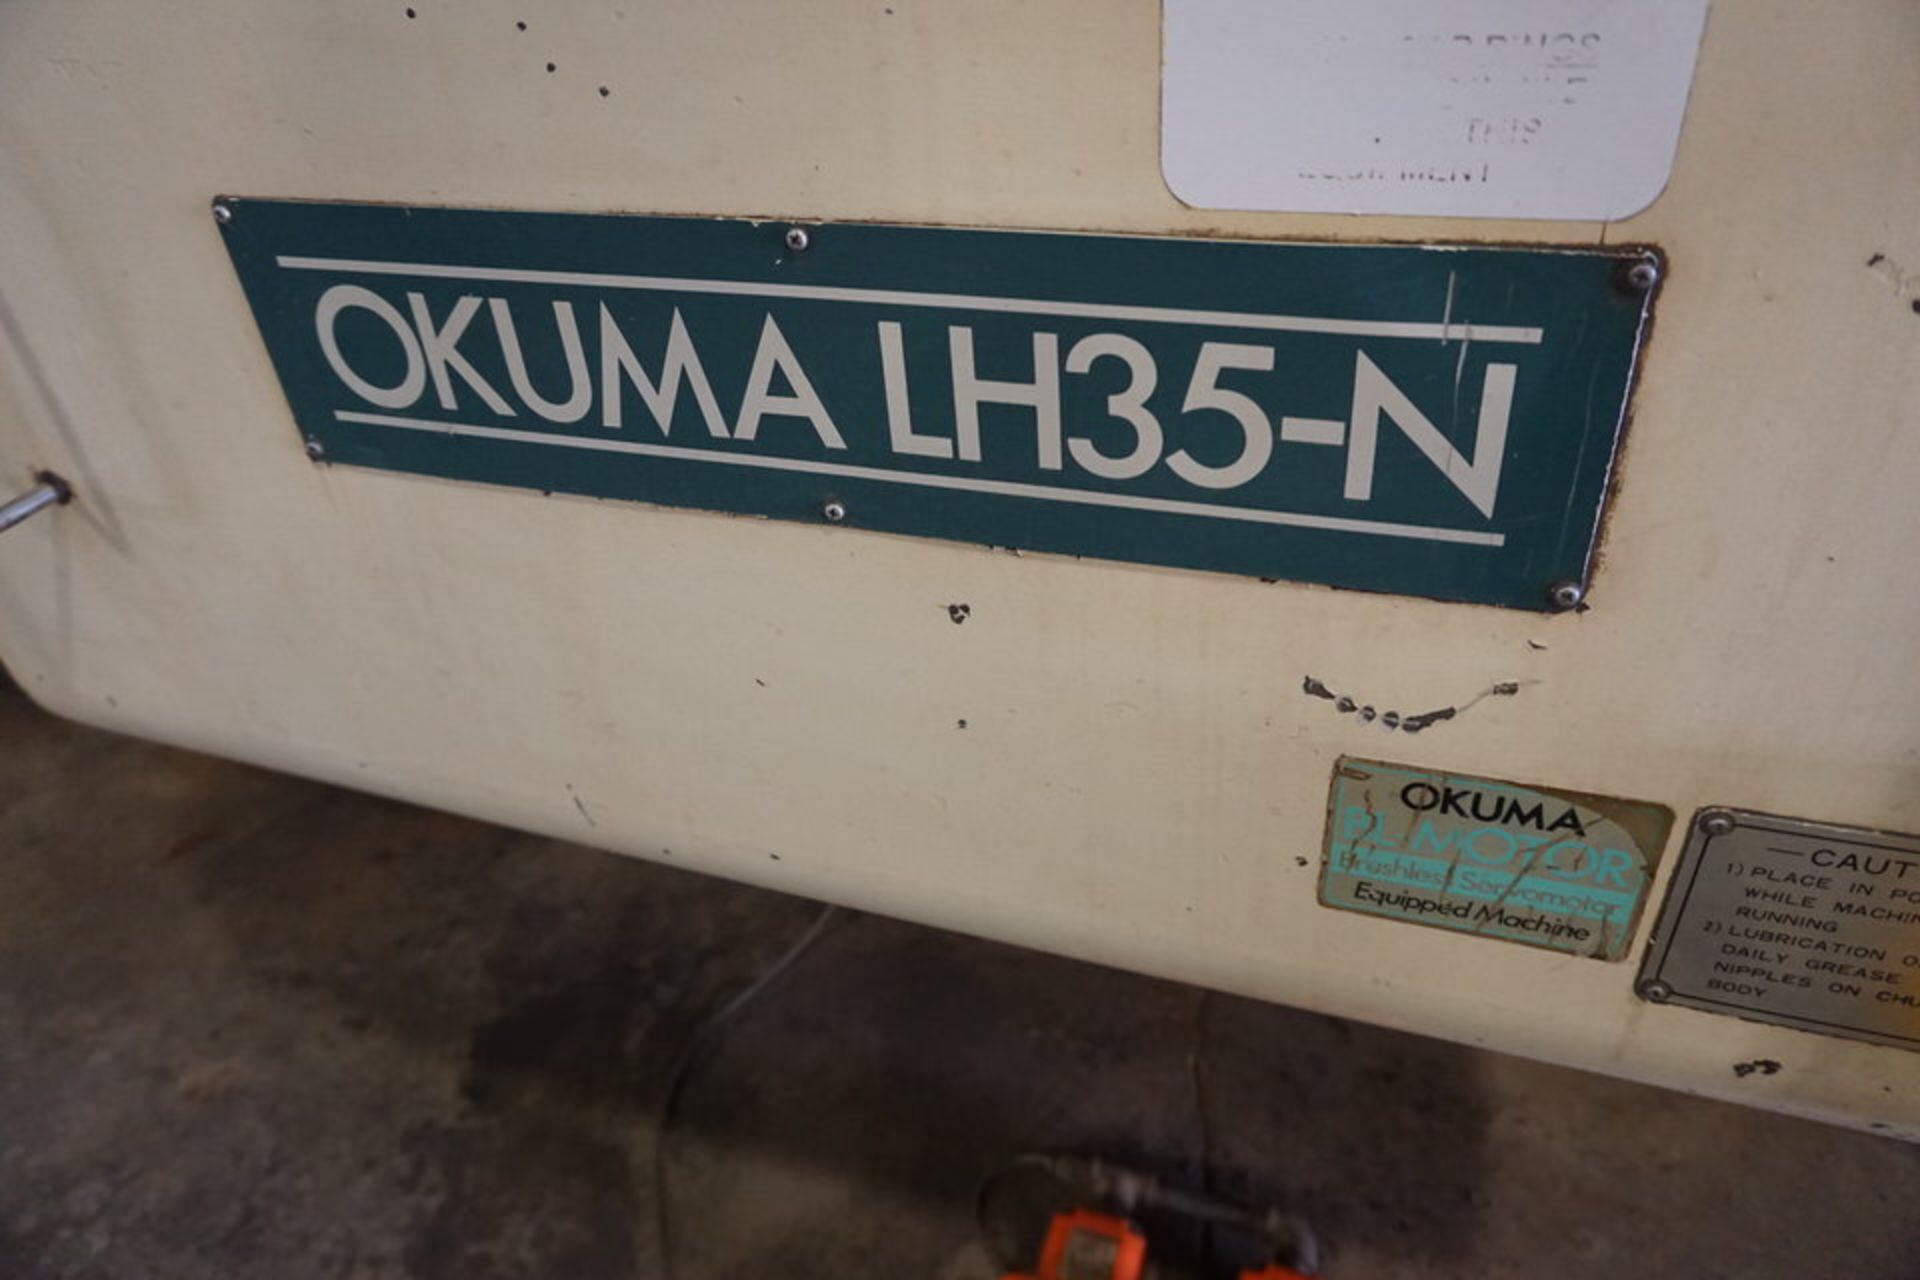 OKUMA LH35-N CNC LATHE, APPROX 24" SWING X 60" CENTERS, 12" 4 JAW CHUCK, 4 WAY TOOL POST - Image 2 of 9